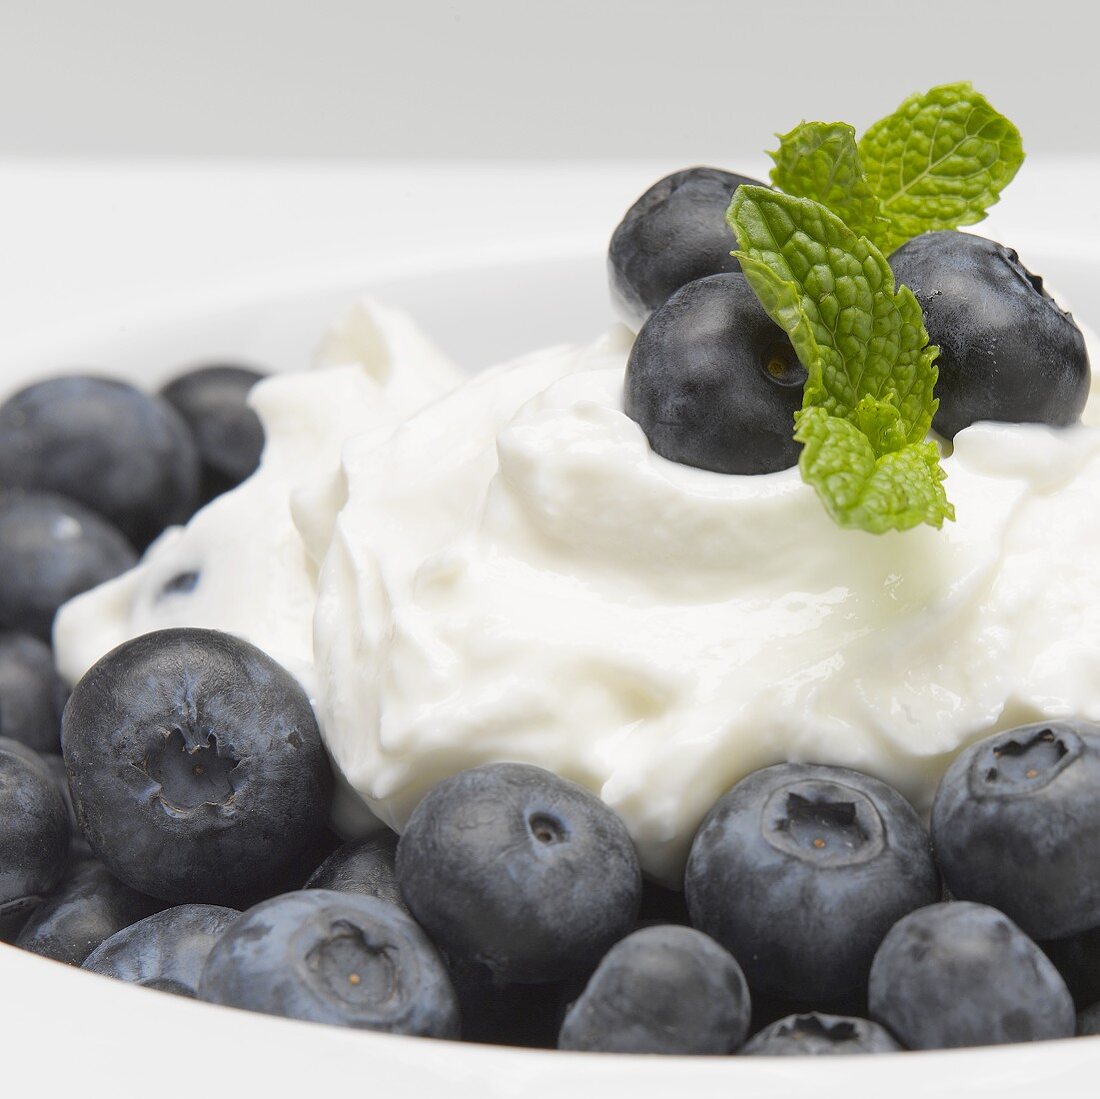 Greek Yogurt with Blueberries and Mint